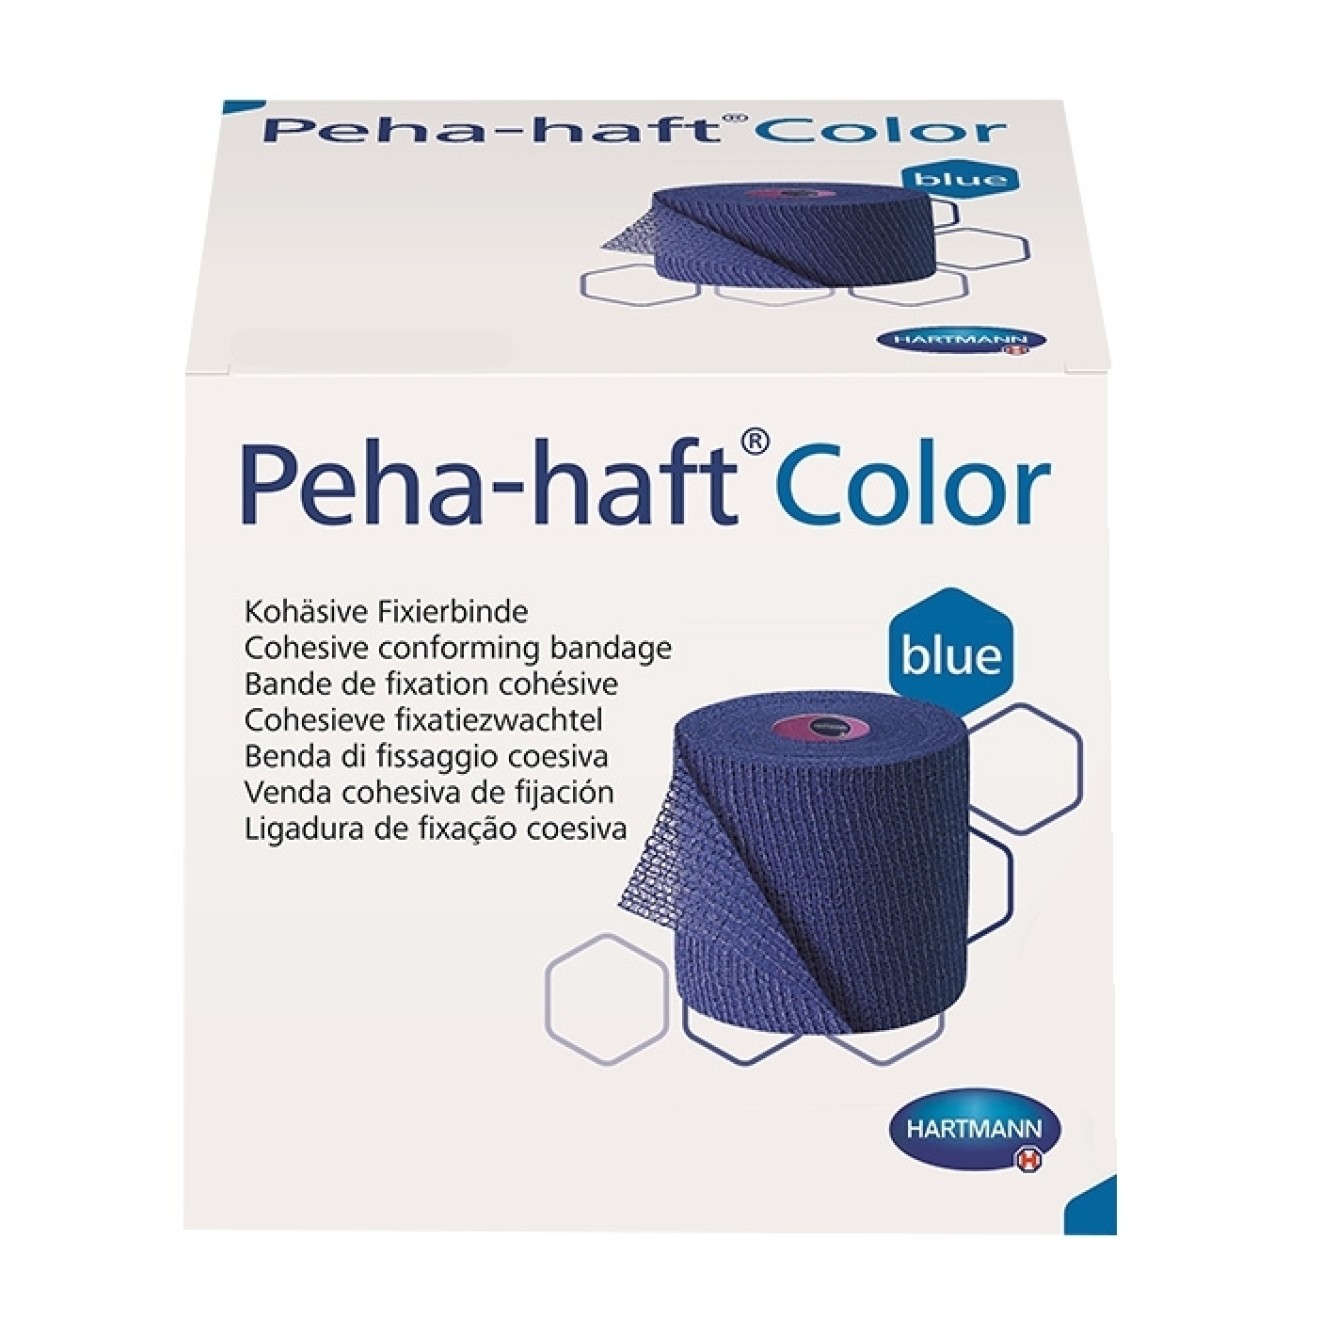 PEHA-HAFT Color Fixierbinde latexfrei 6 cmx21 Sonderpreis